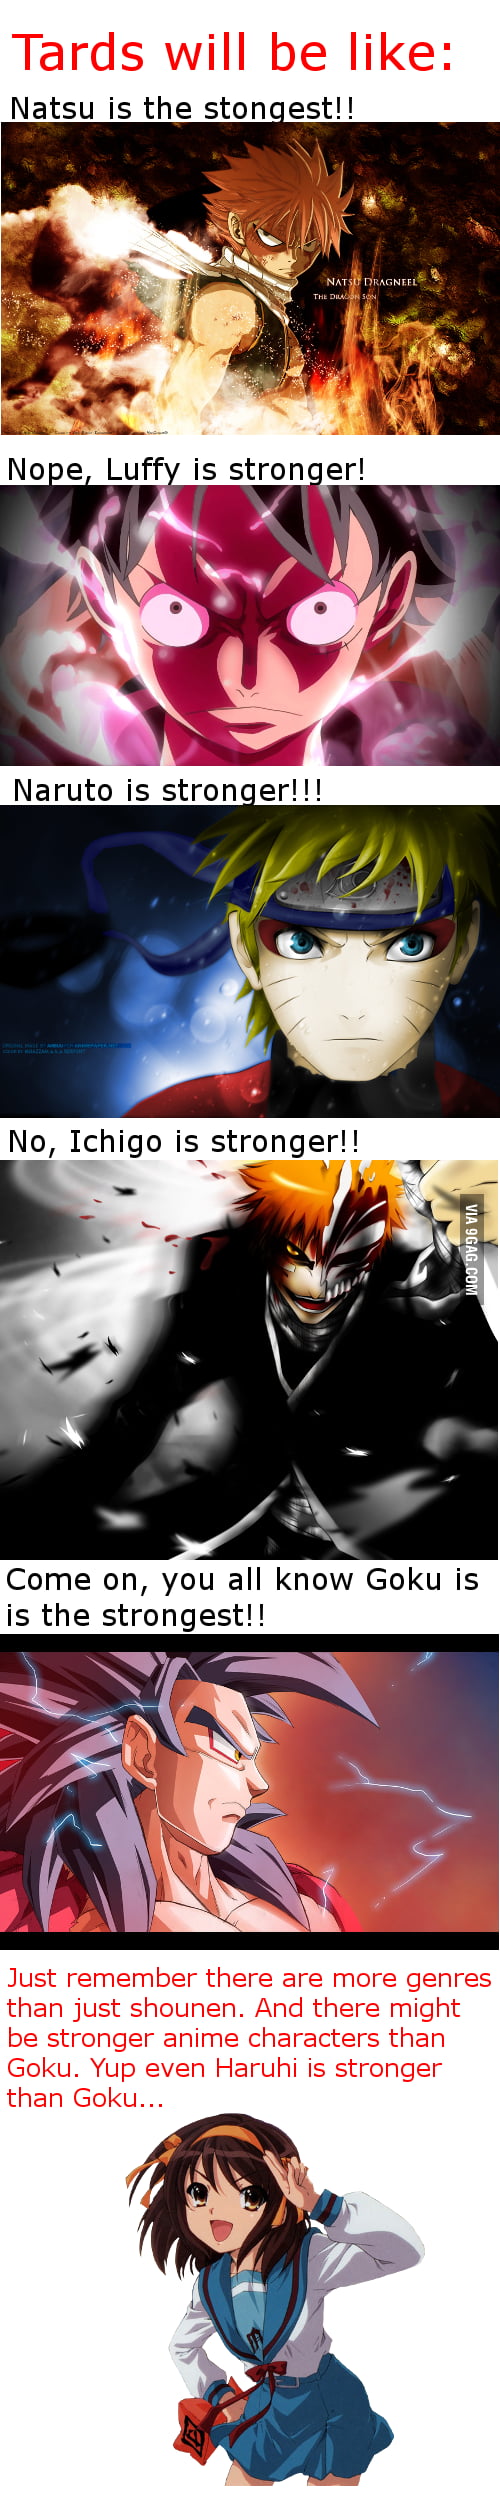 One Punch Man How is Saitama stronger than Goku